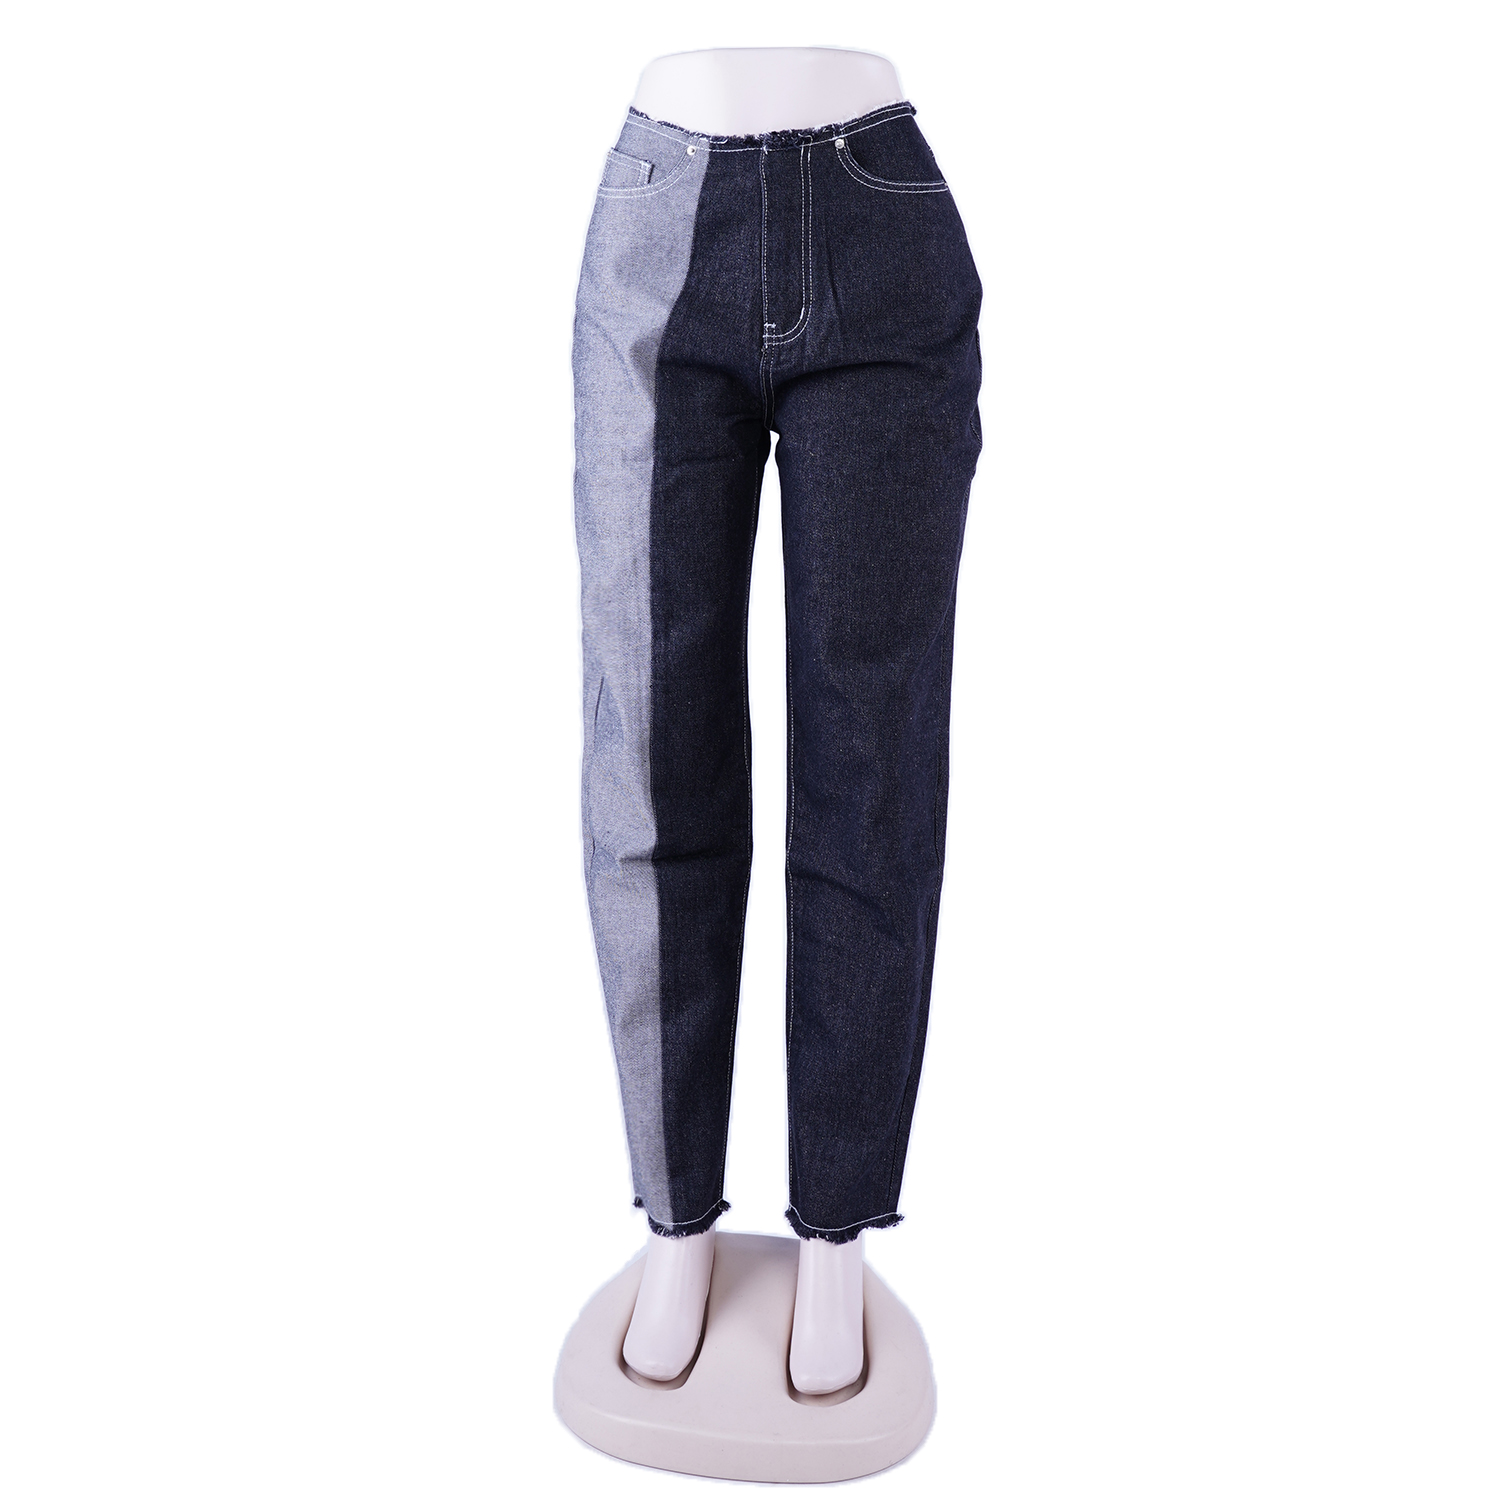 SKYKINGDOM designer 4 seasons denim jeans blue black two tone cotton women jeans